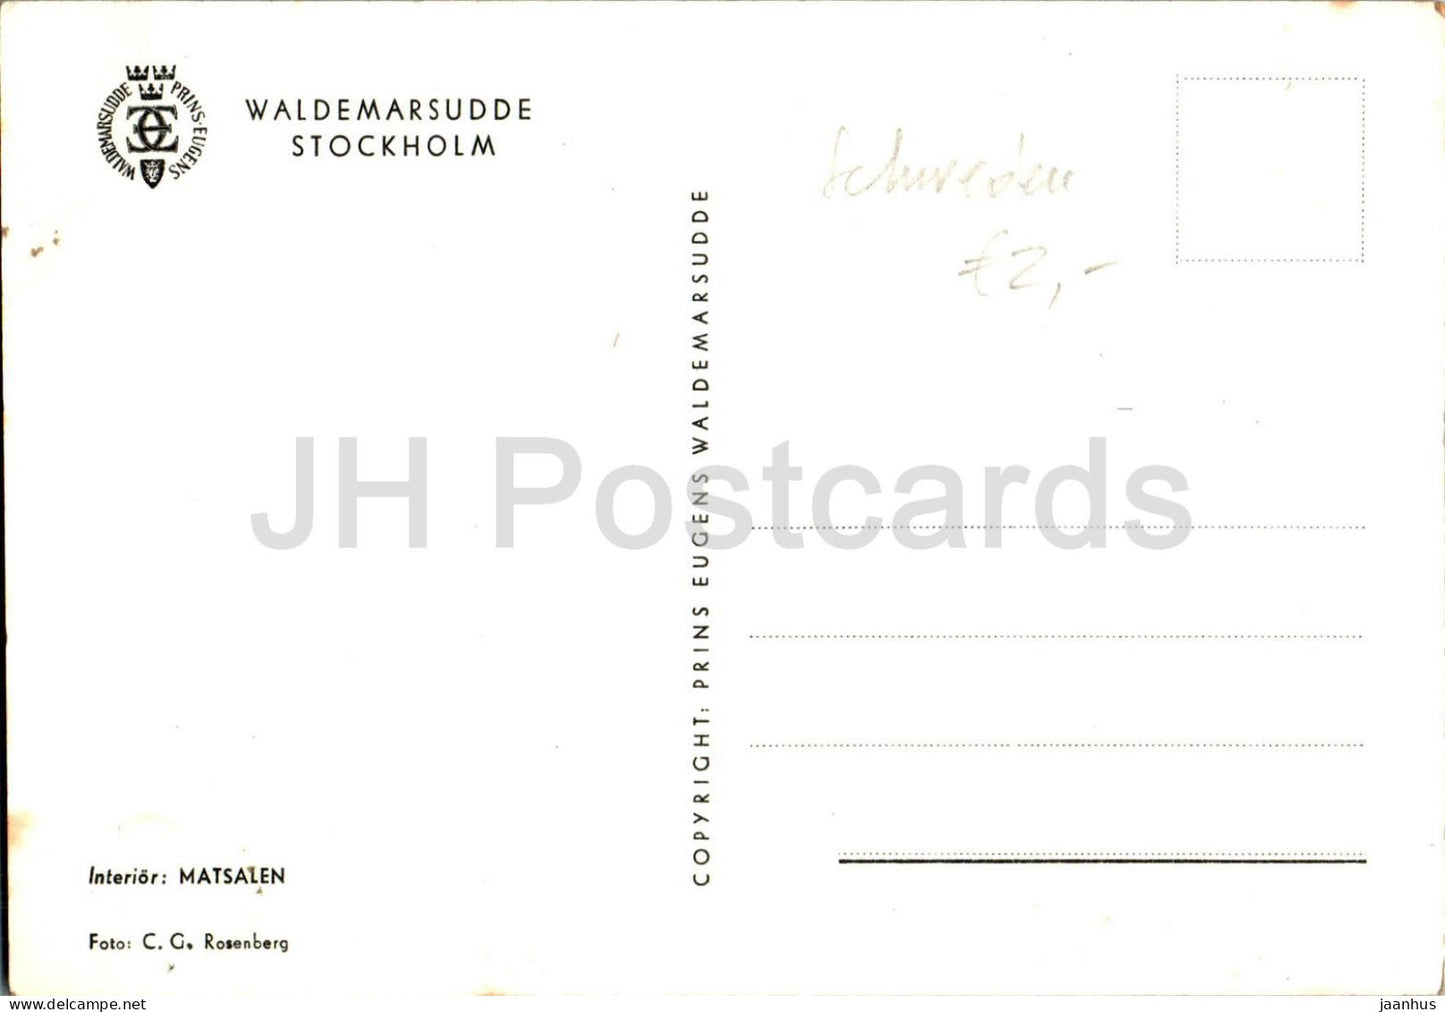 Stockholm - Waldemarsudde - Interior - Matsalen - Interior - Dining room - old postcard - Sweden - unused